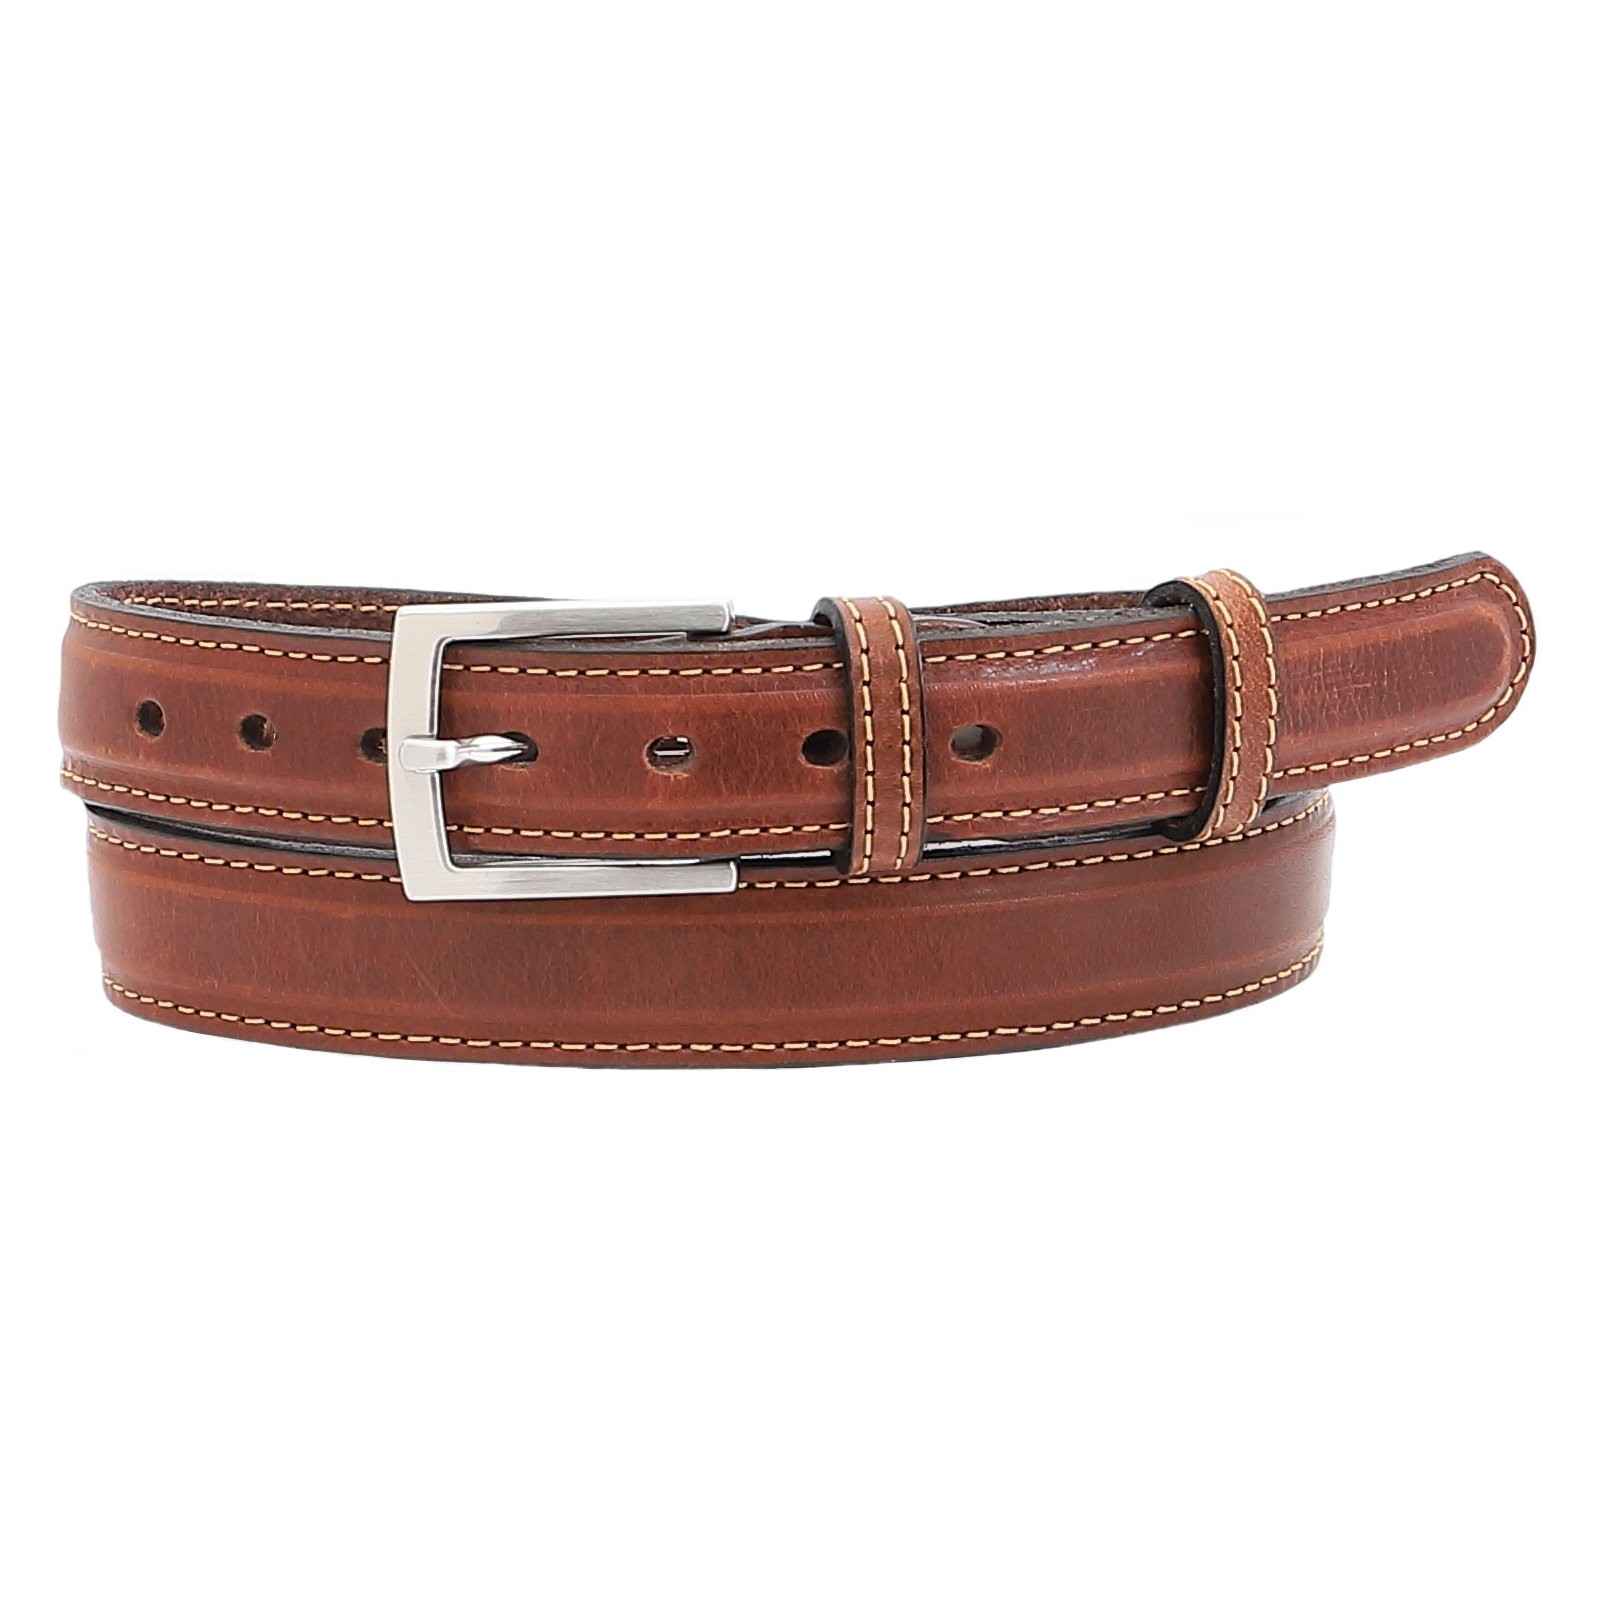 NK1917 Leather belt 9130R 105cm Brown